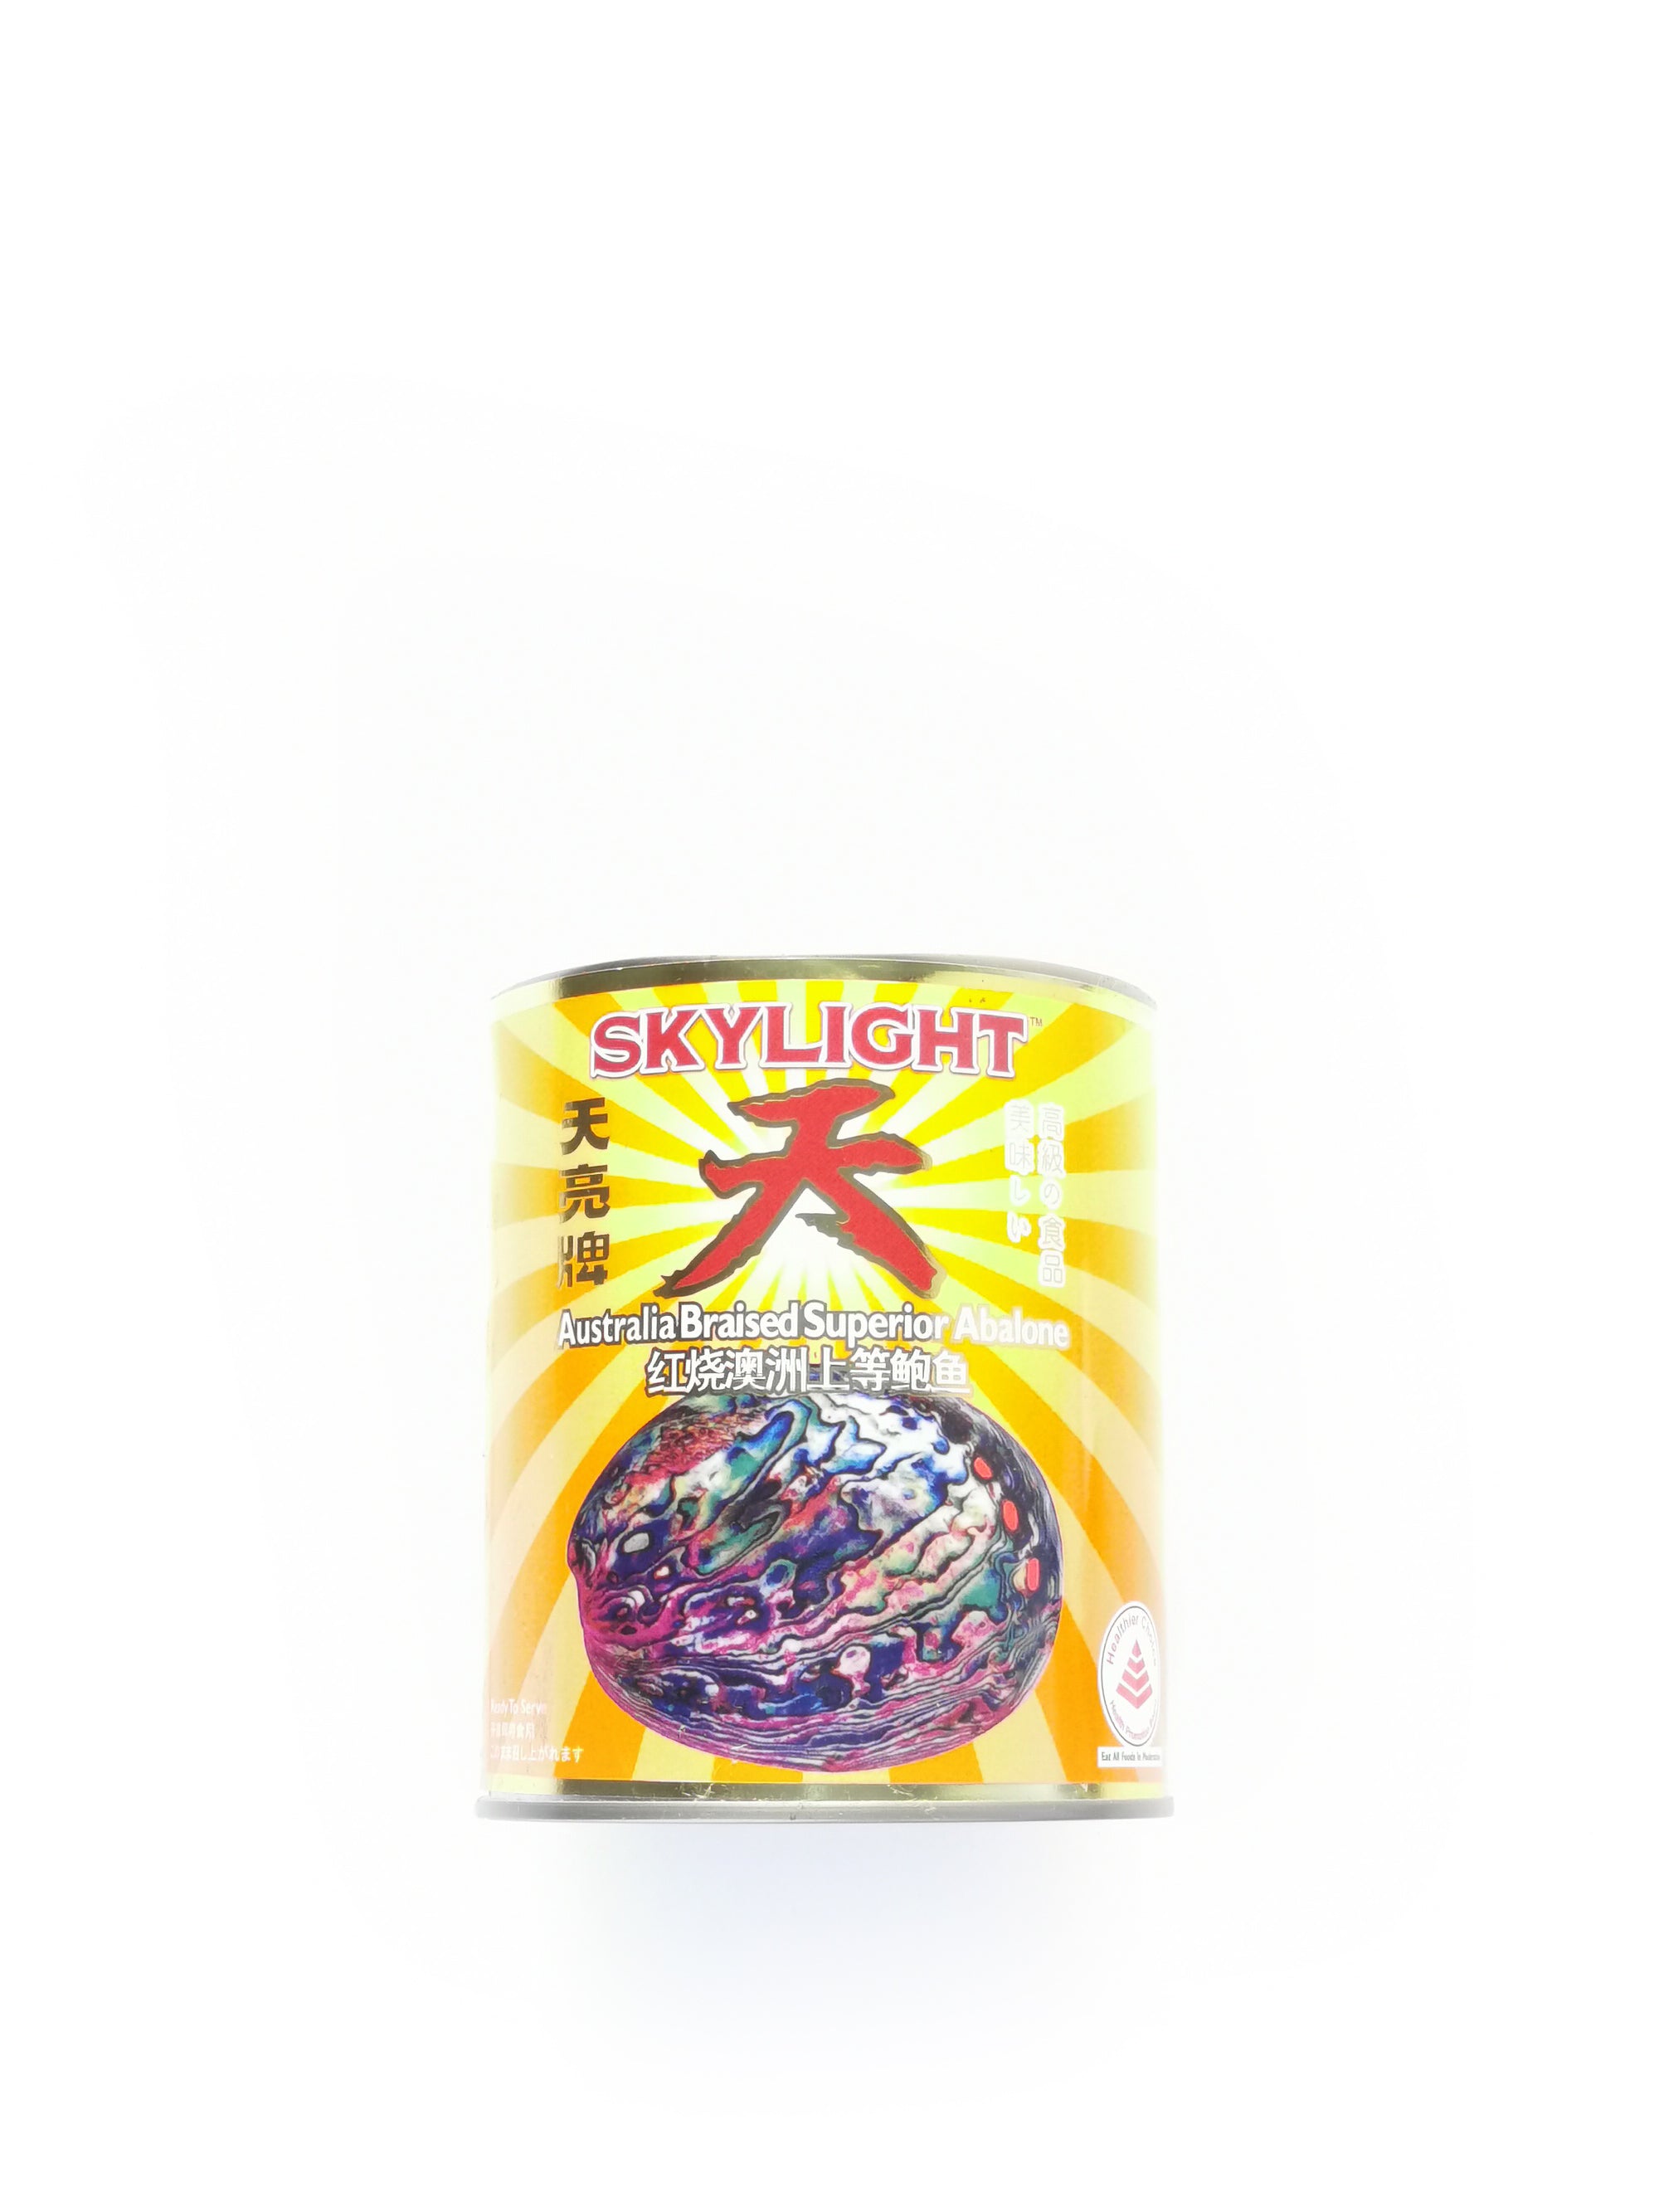 Skylight Australia Braised Superior Abalone 天亮牌紅燒澳洲上等鮑魚